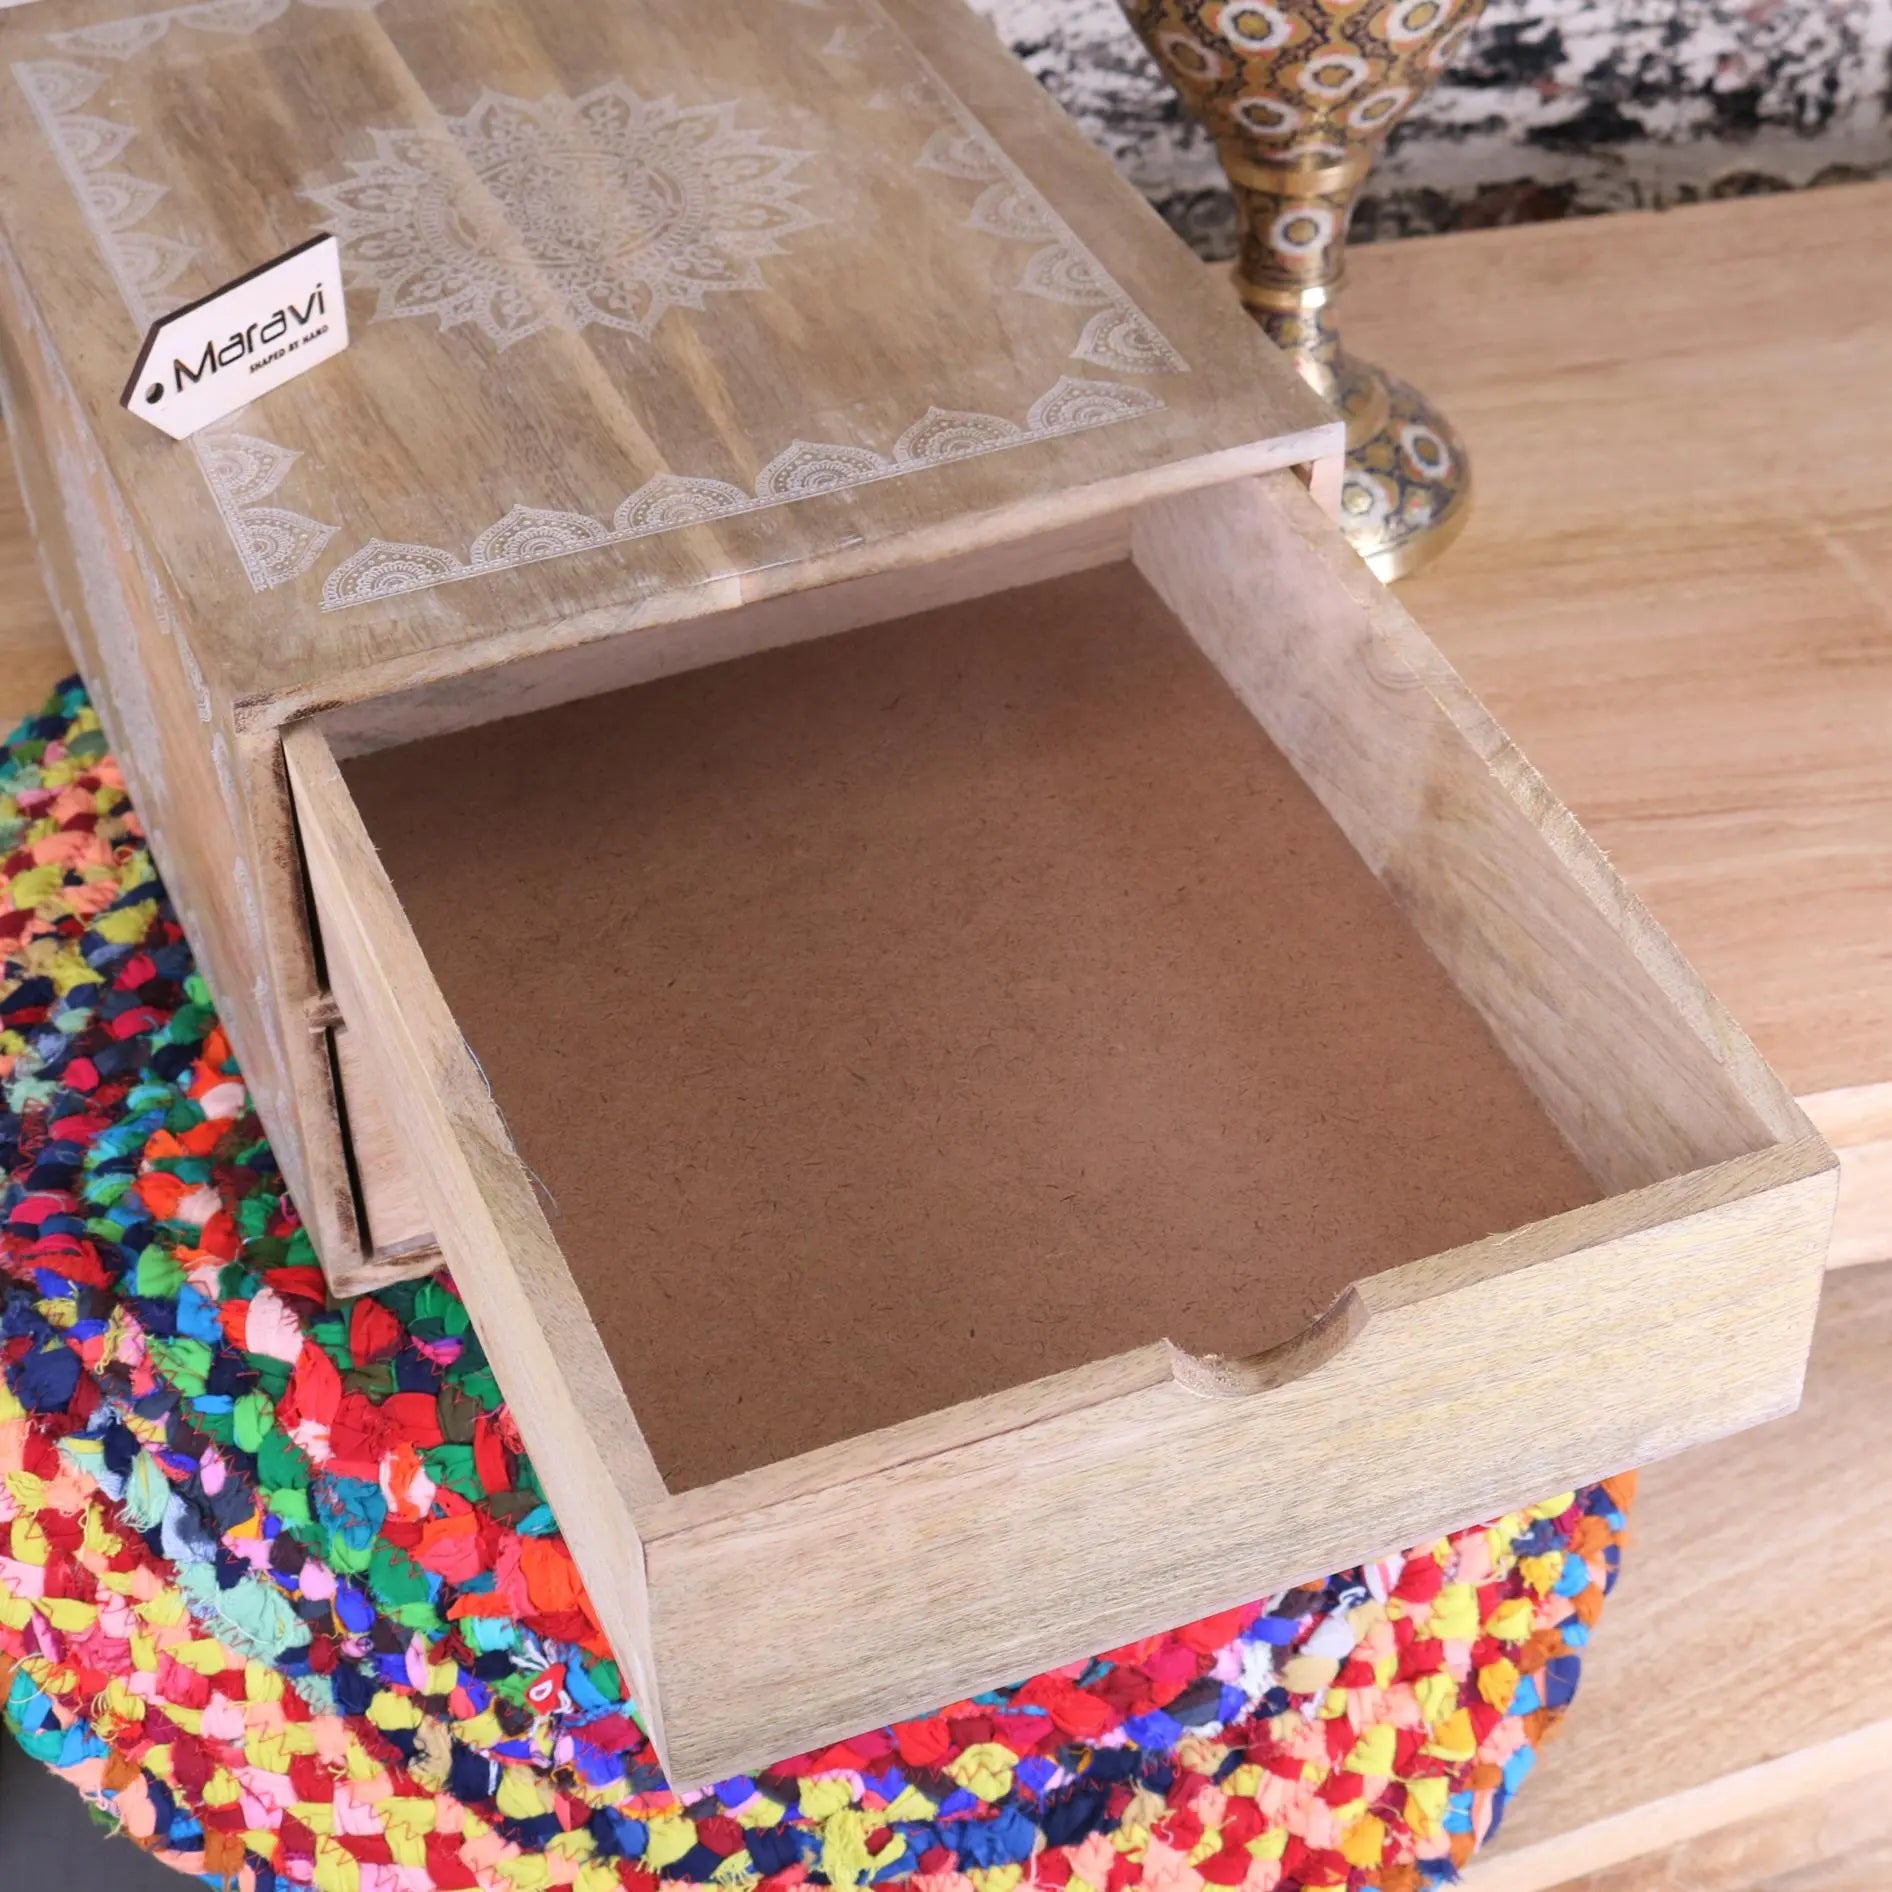 Hijla Mango Wood A4 Filing Box 2 Drawers Mandala Design - Showing Inside of Drawer